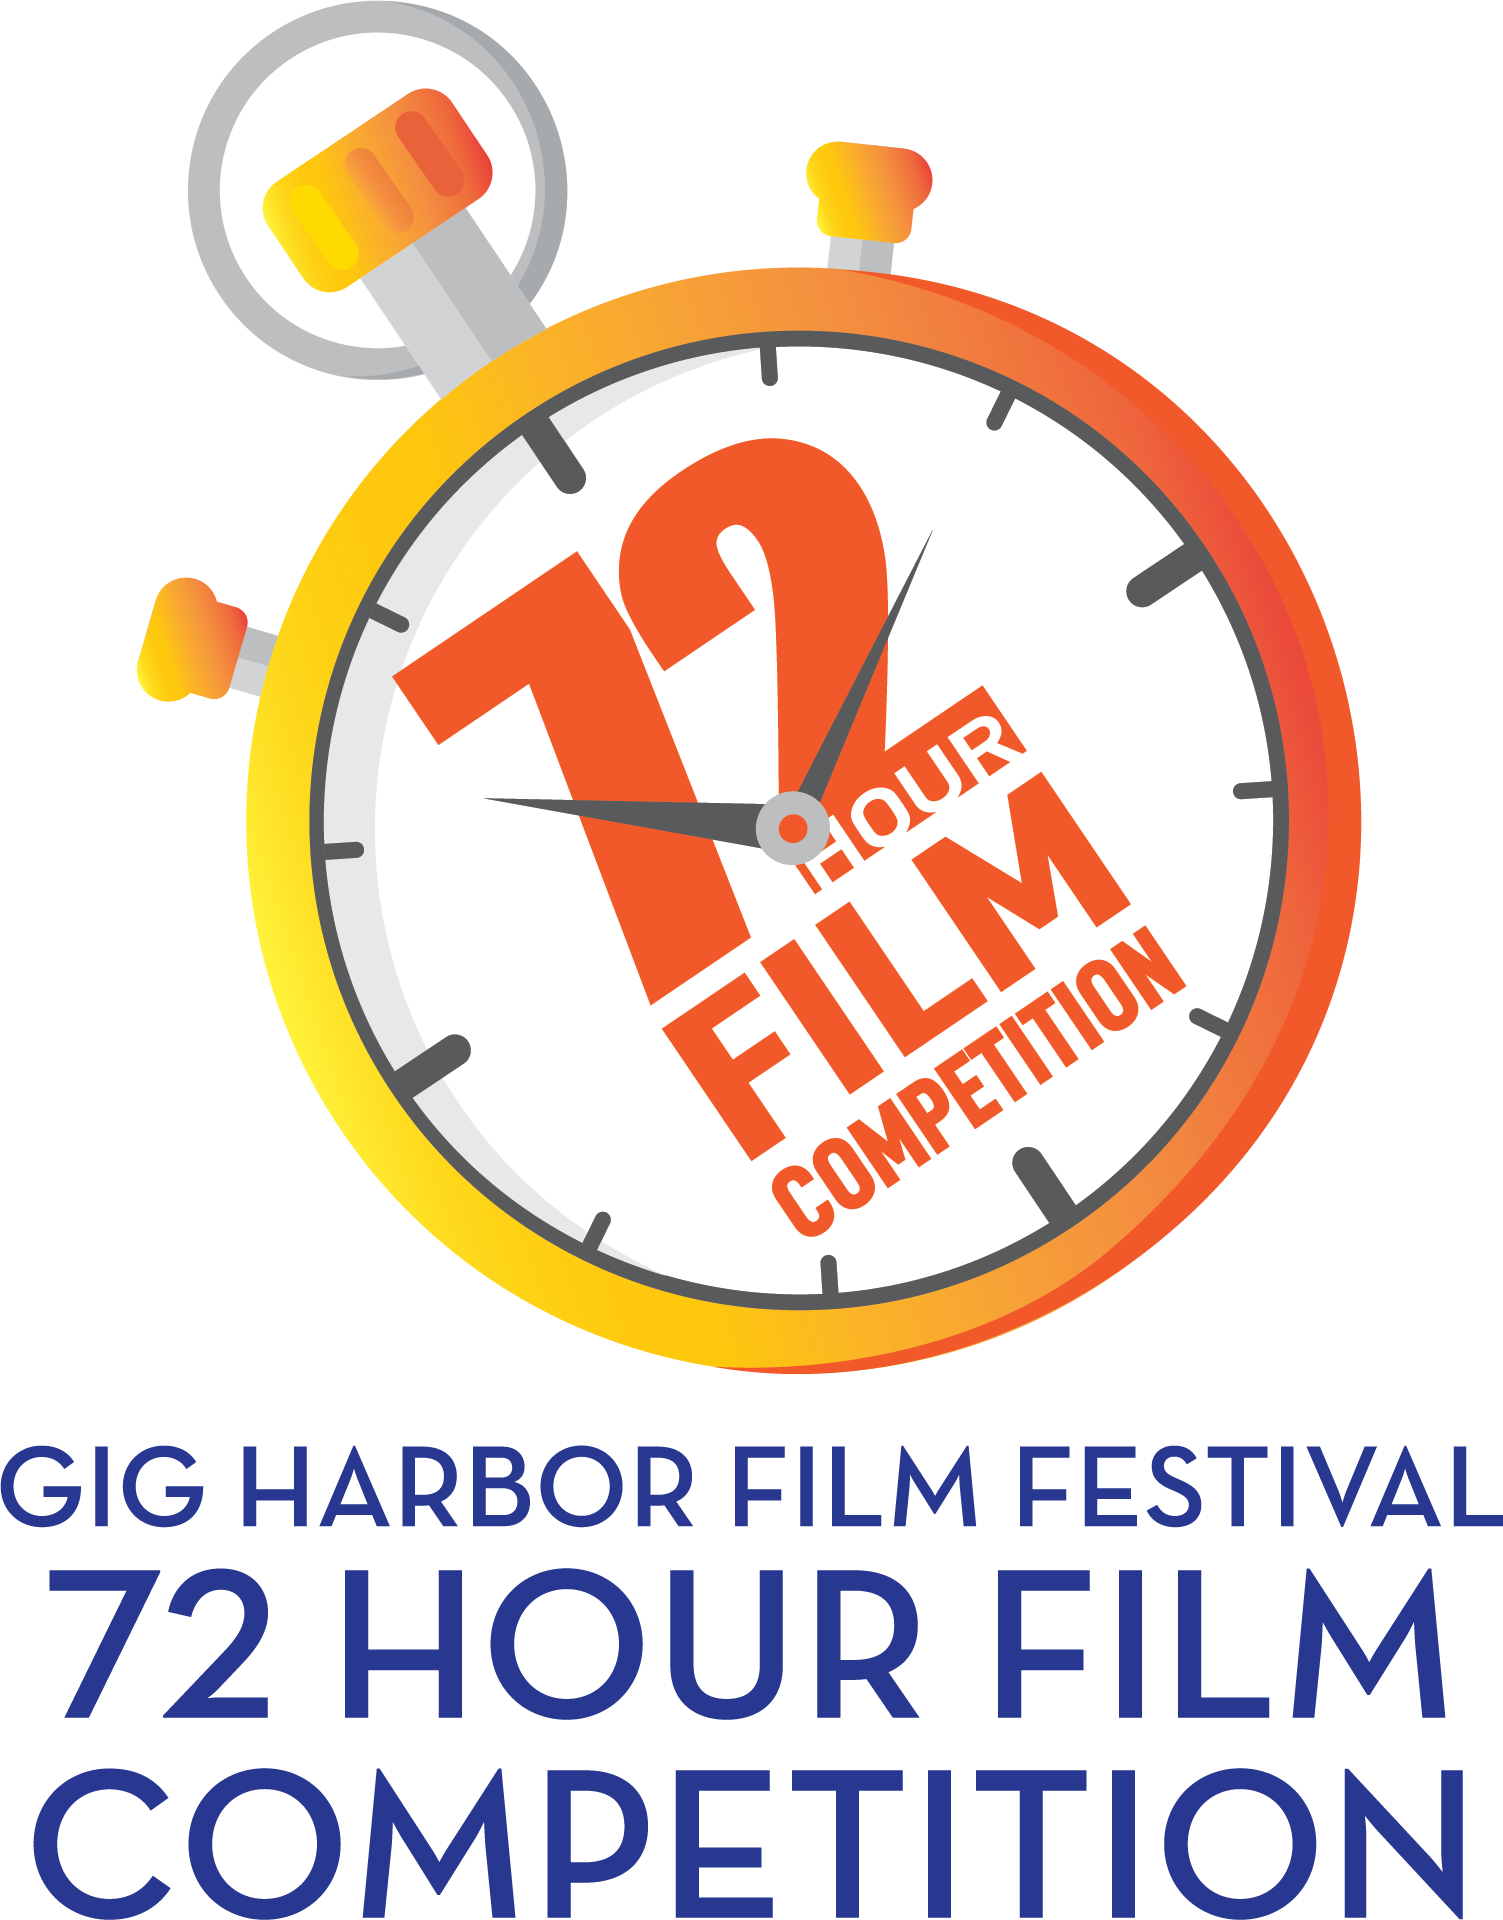 Gig Harbor Film Festival 2020 Washington's Destination Film Festival